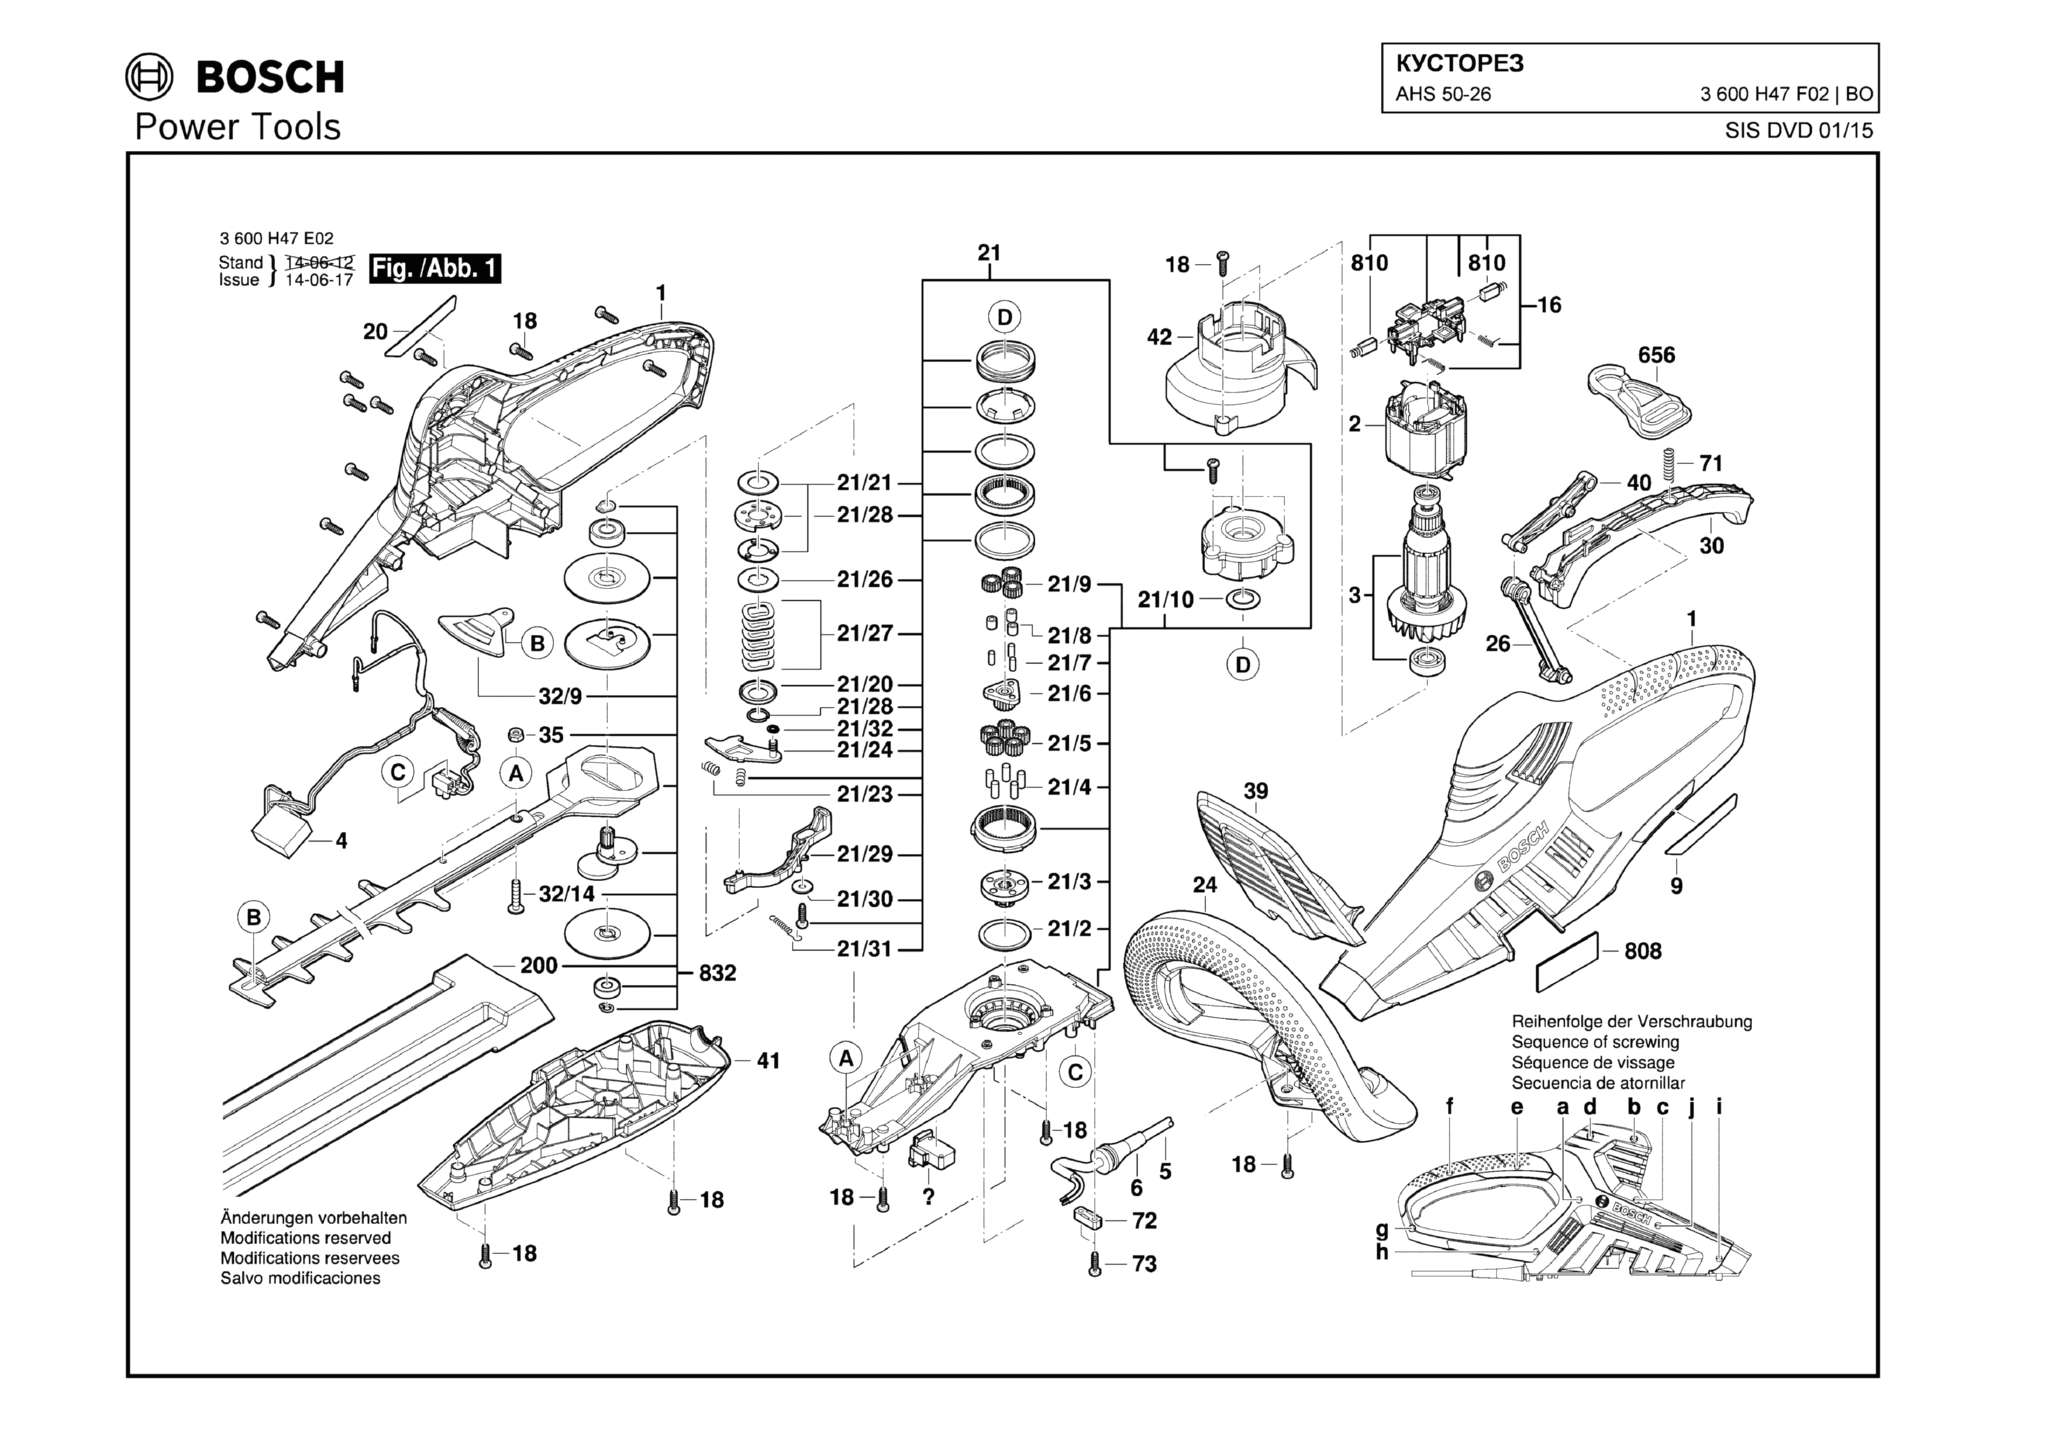 Запчасти, схема и деталировка Bosch AHS 50-26 (ТИП 3600H47F02)